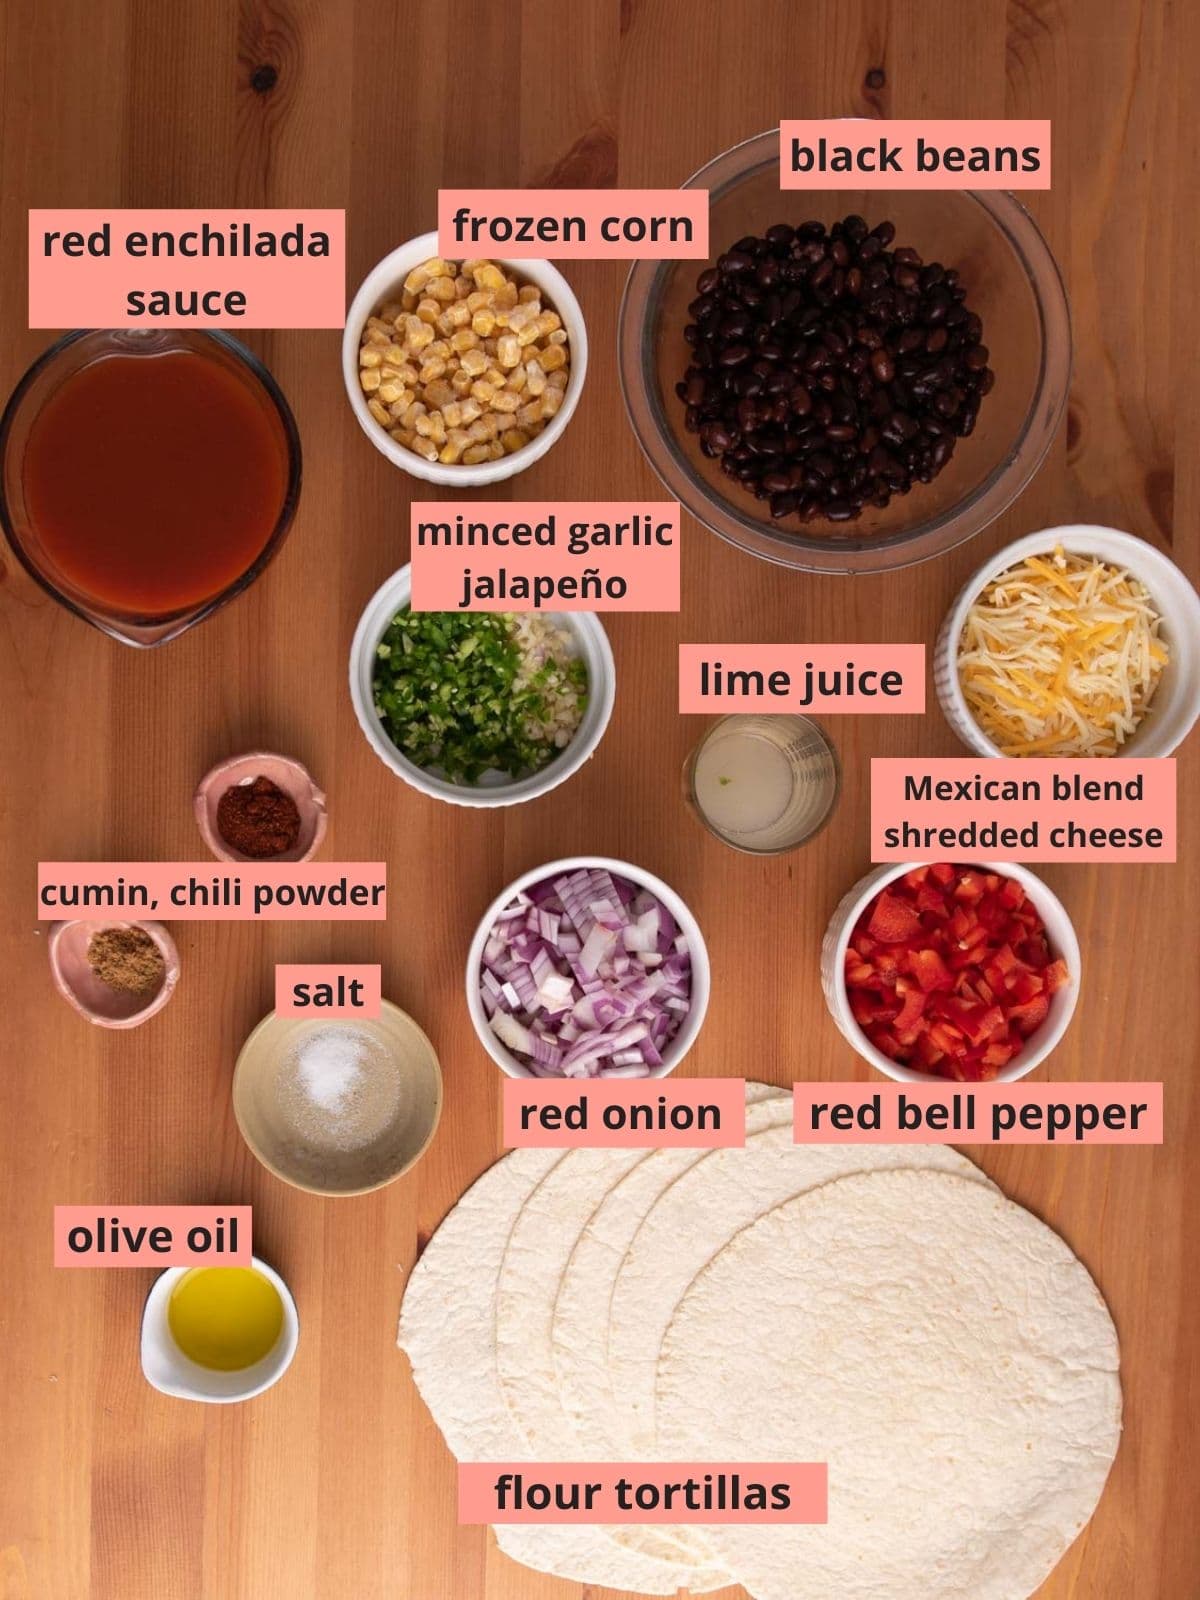 Labeled ingredients used to make enchiladas.